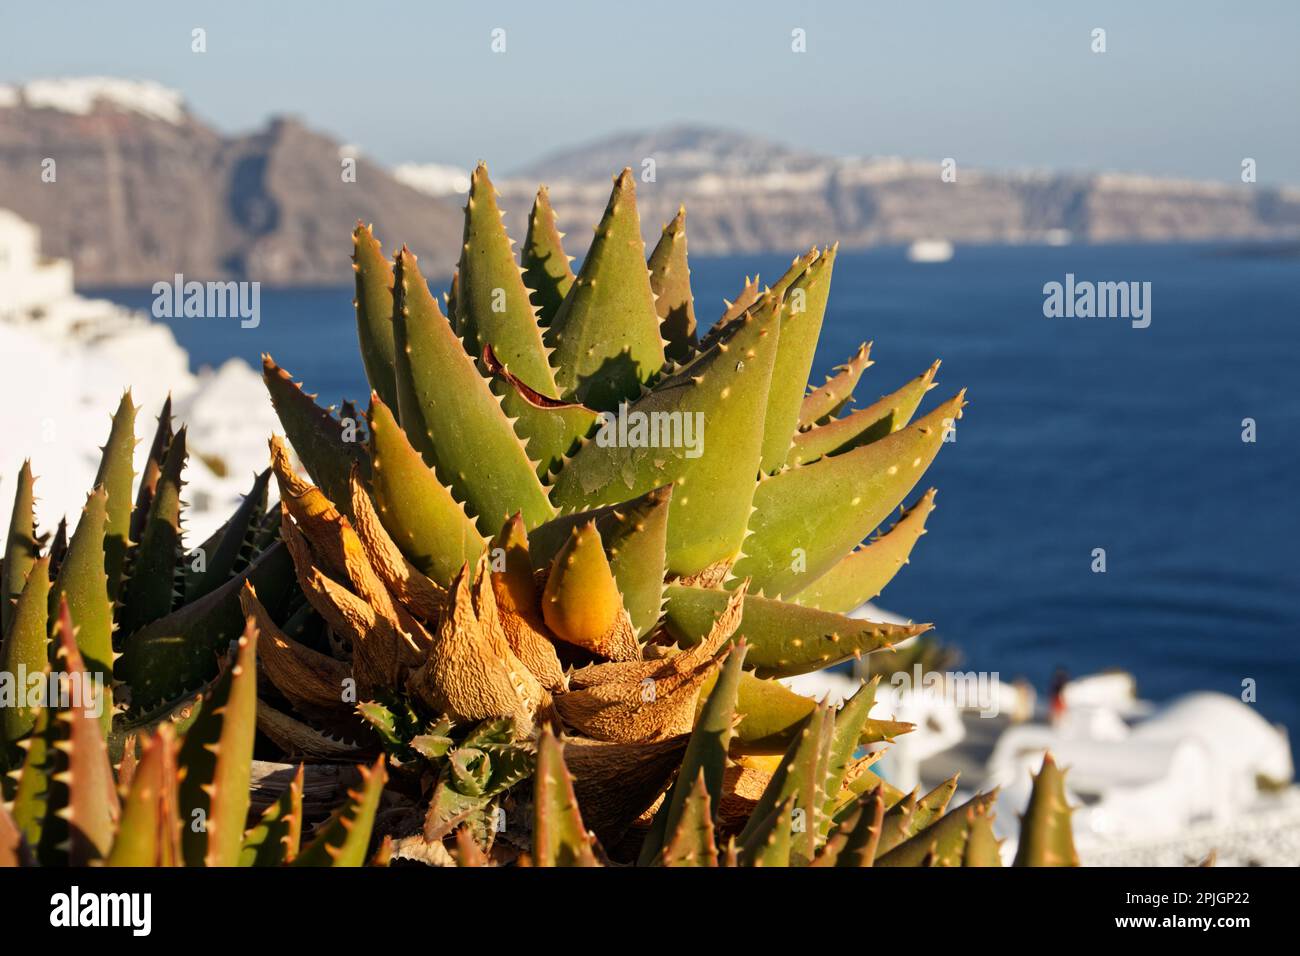 A close-up shot of an aloe plant in Oia, Santorini, Greece Stock Photo